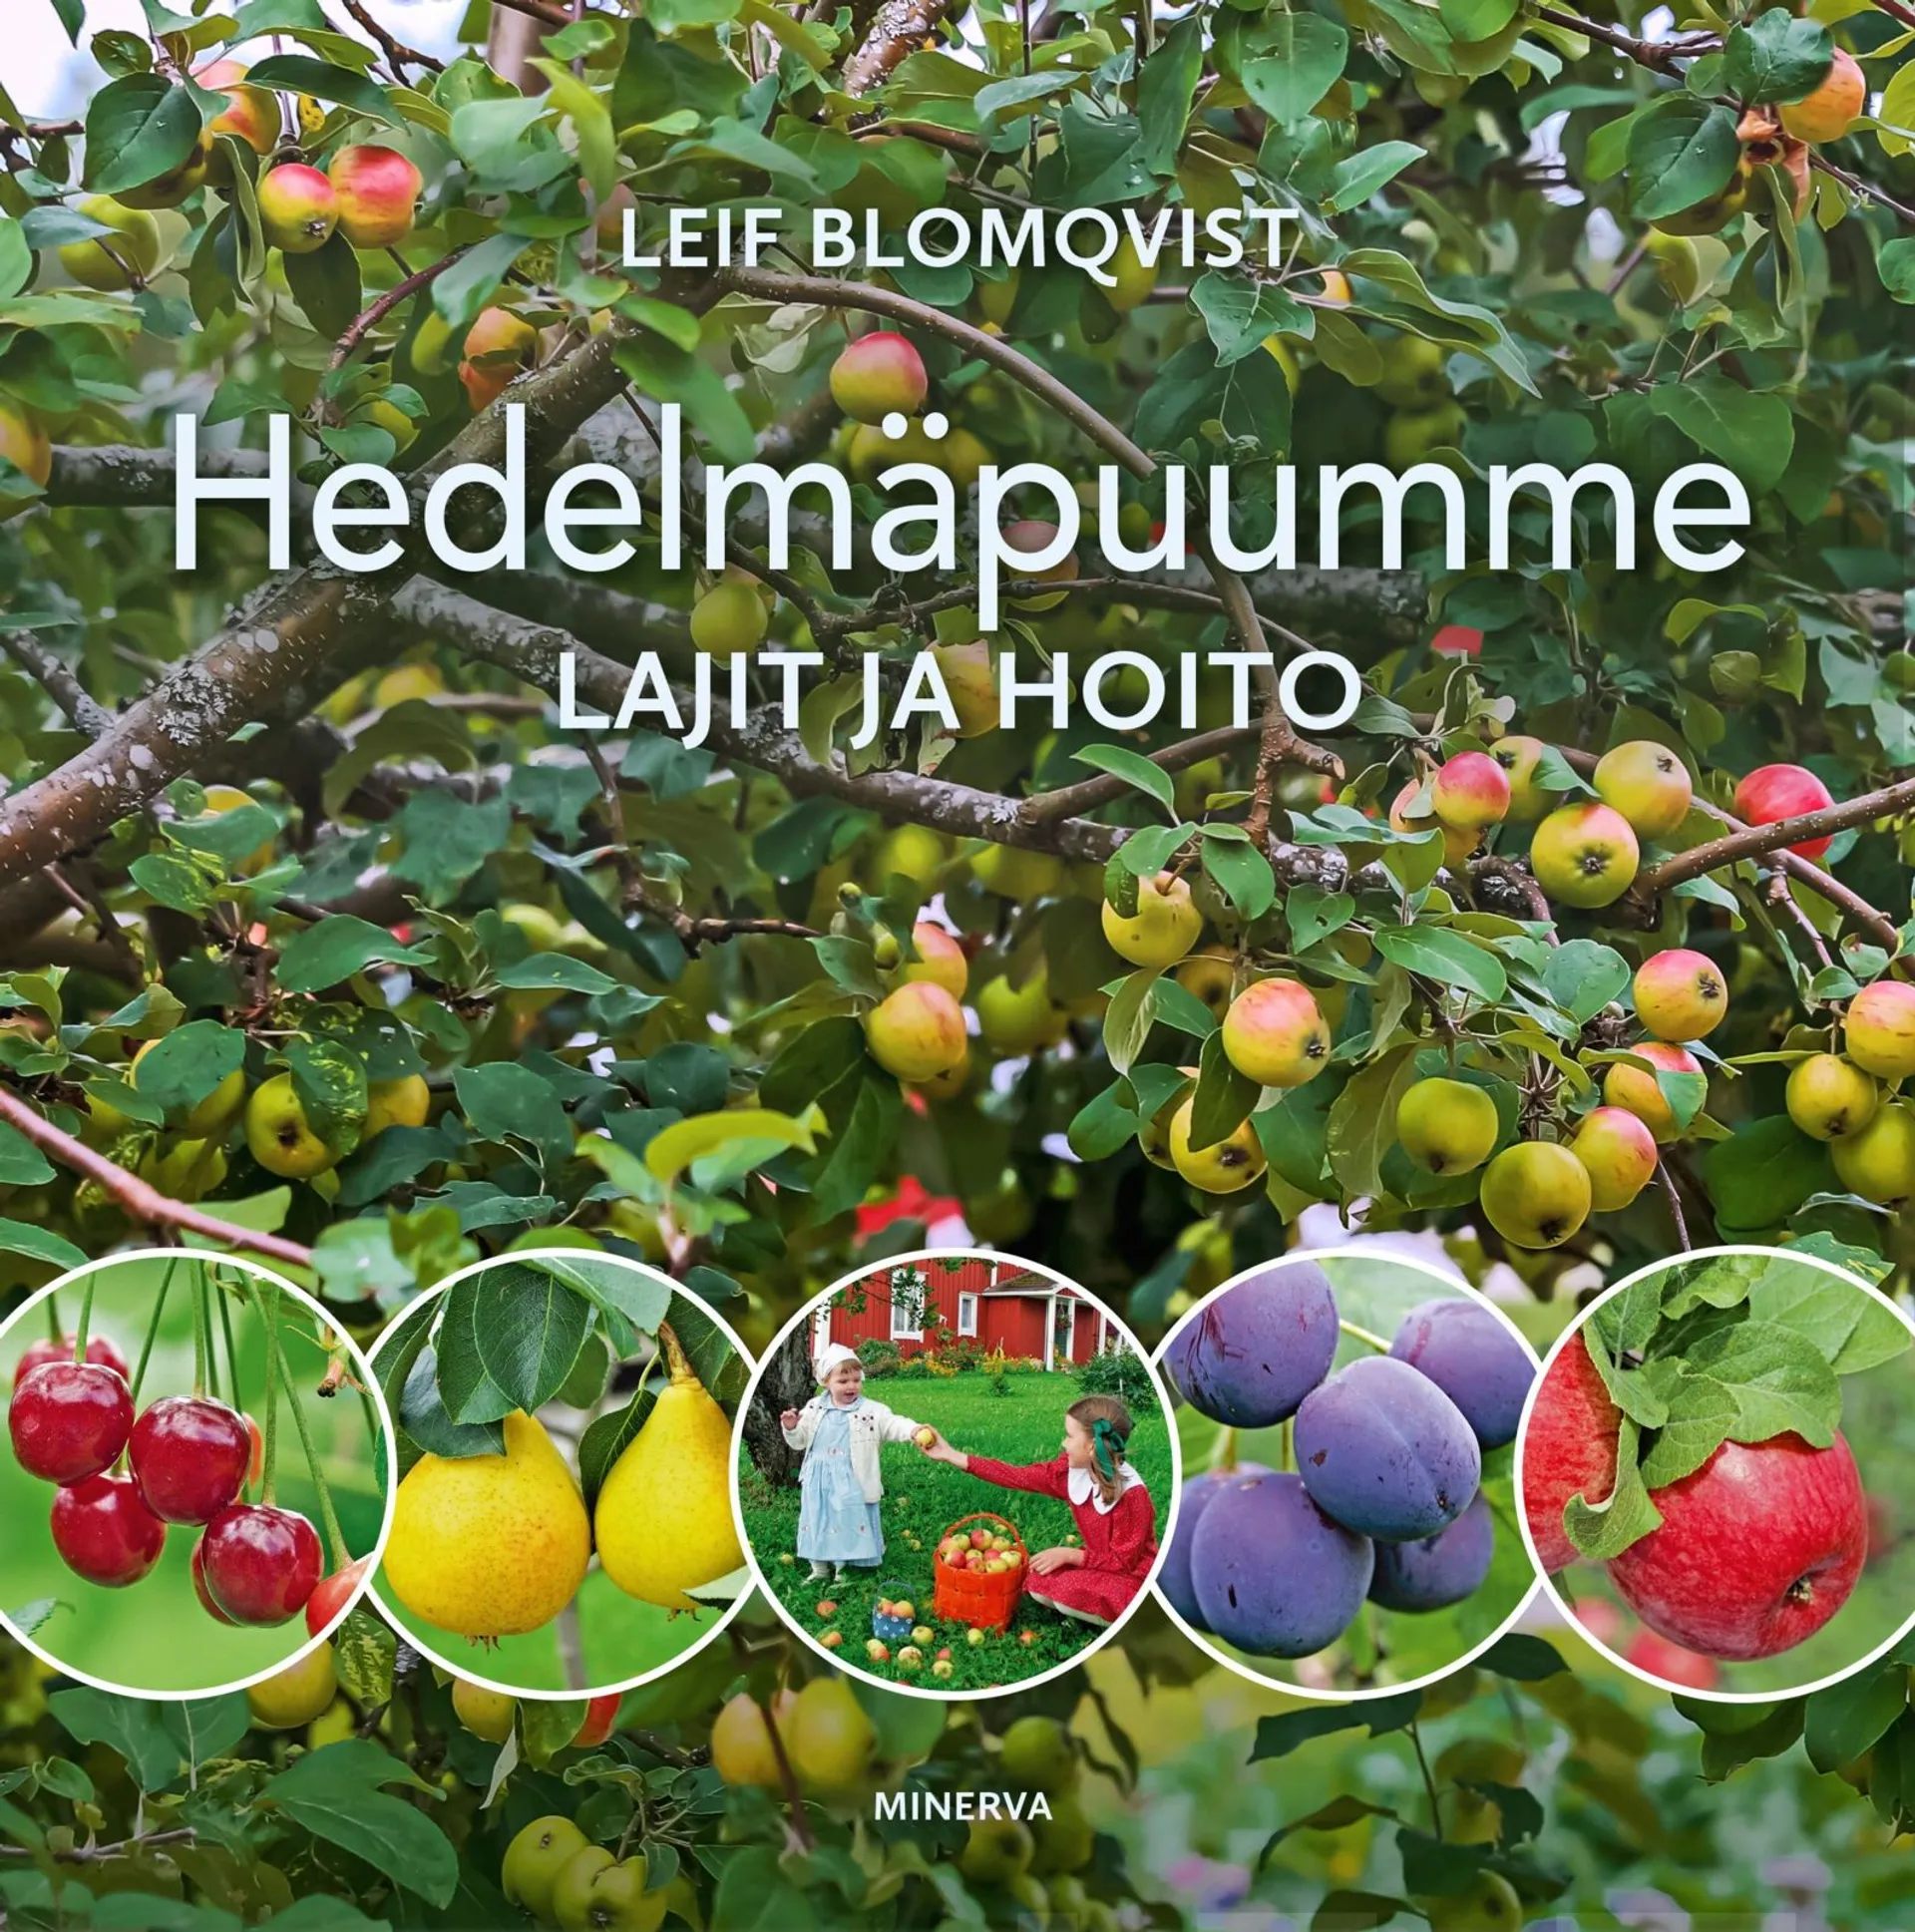 Blomqvist, Hedelmäpuumme - Lajit ja hoito